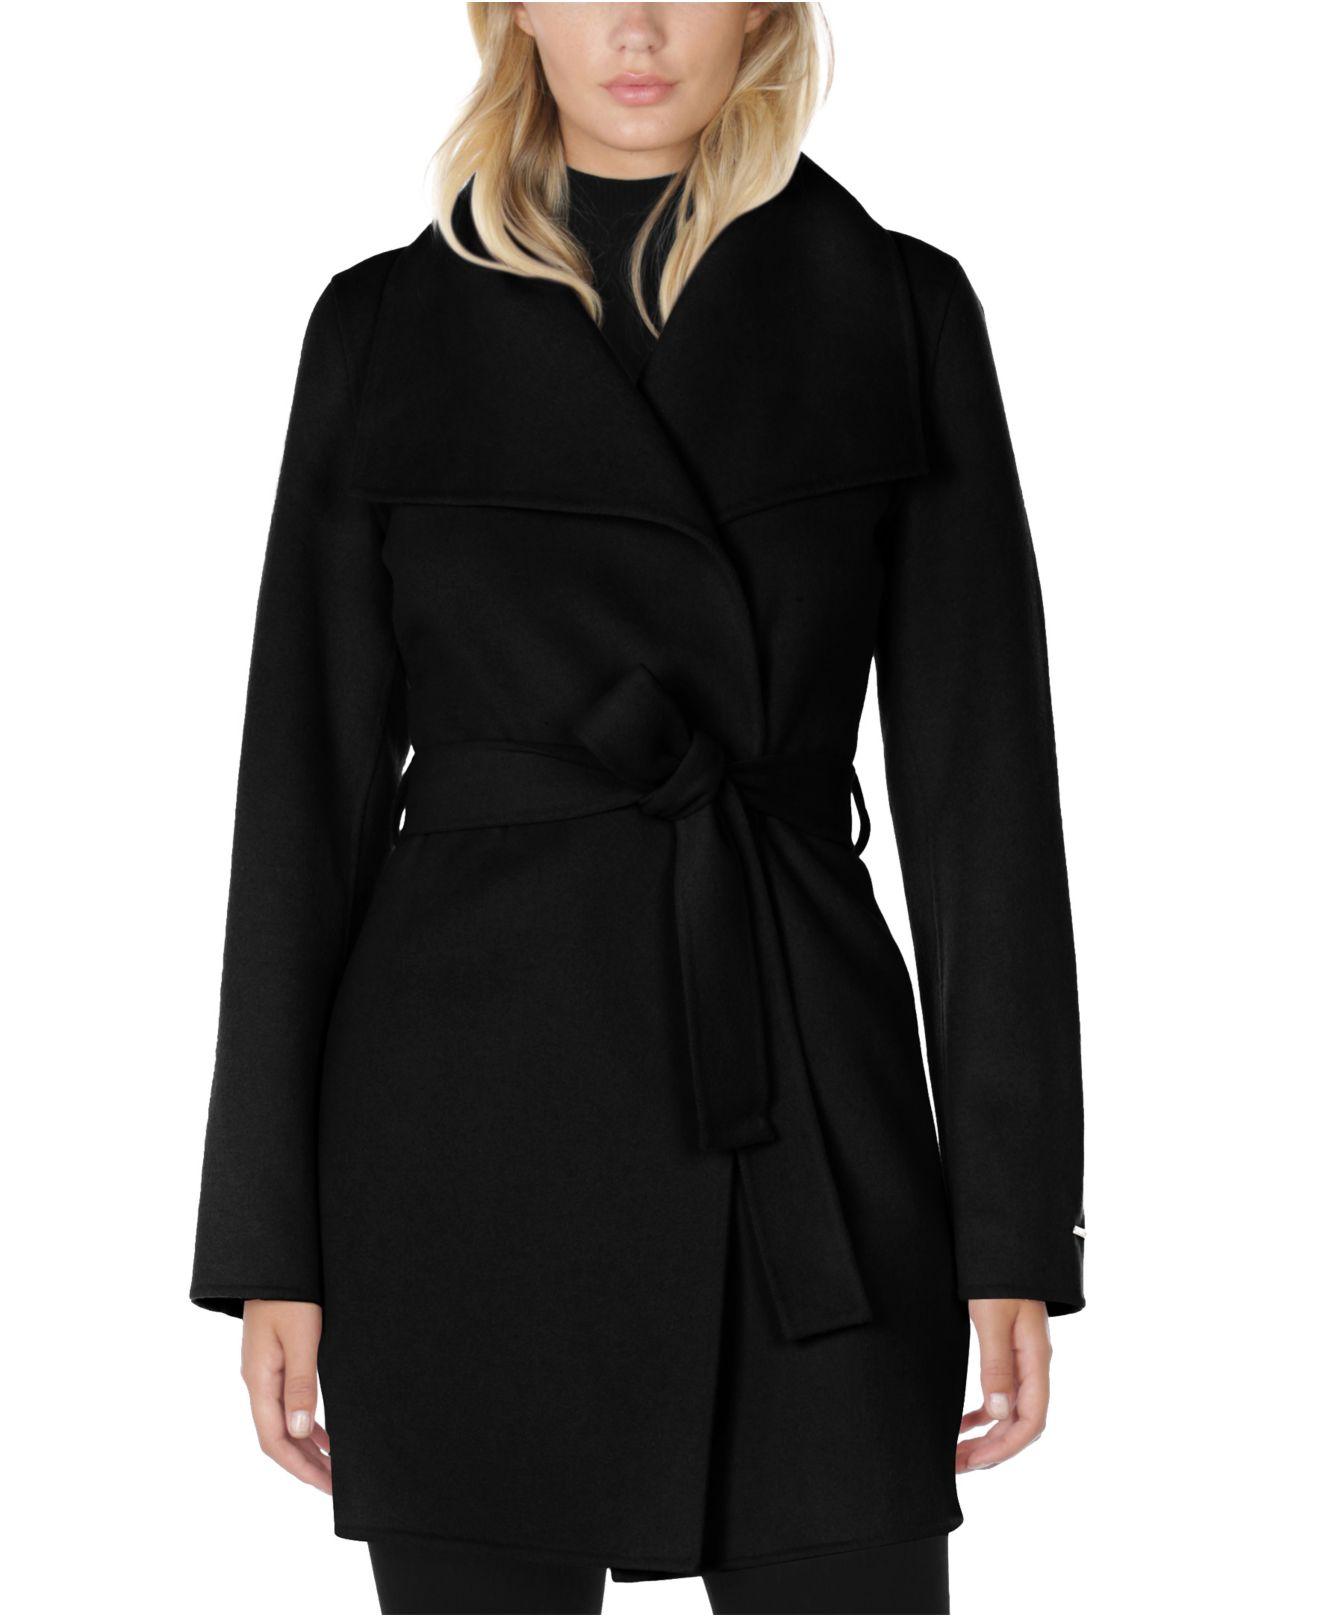 Tahari Wool Ella Double Face Belted Wrap Coat in Black - Lyst